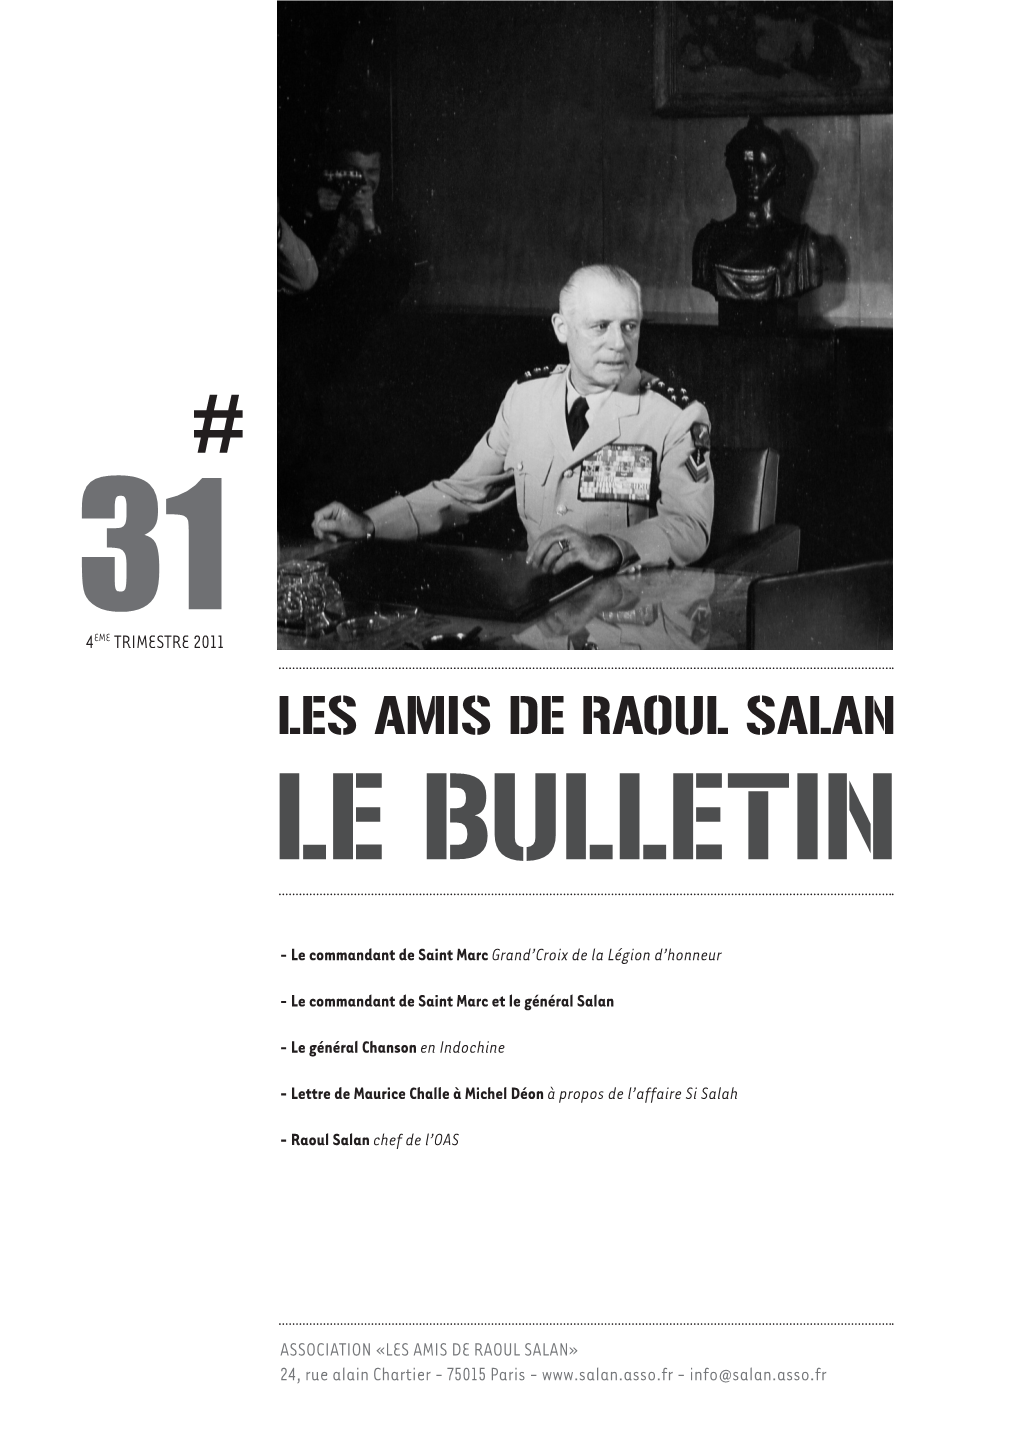 Bulletin 31 / 4Eme Trimestre 2011